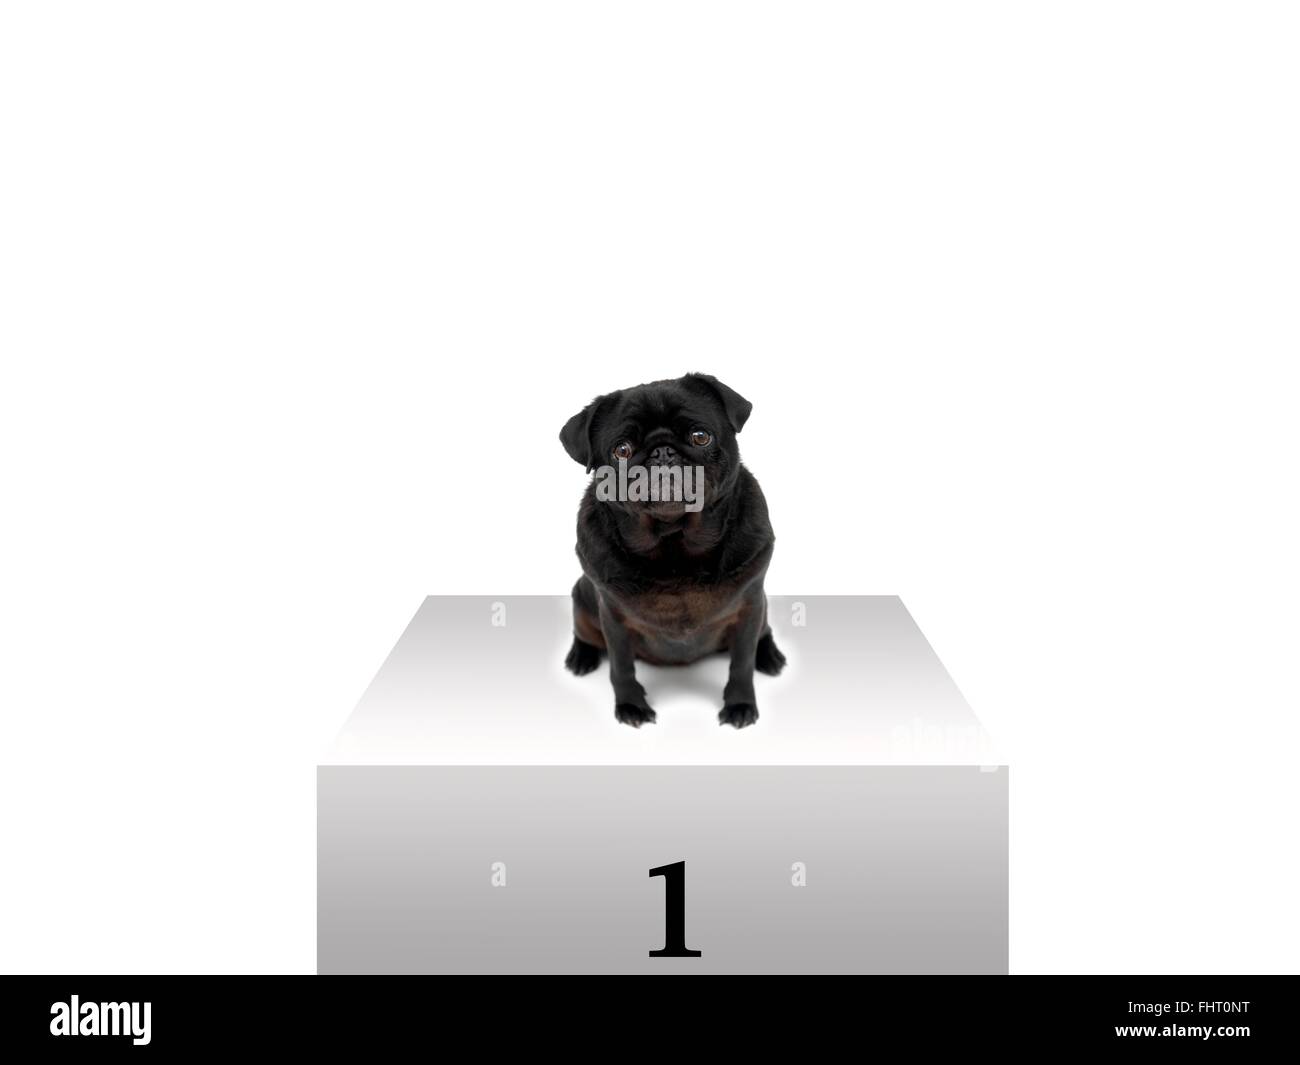 A black pug sitting on a podium Stock Photo